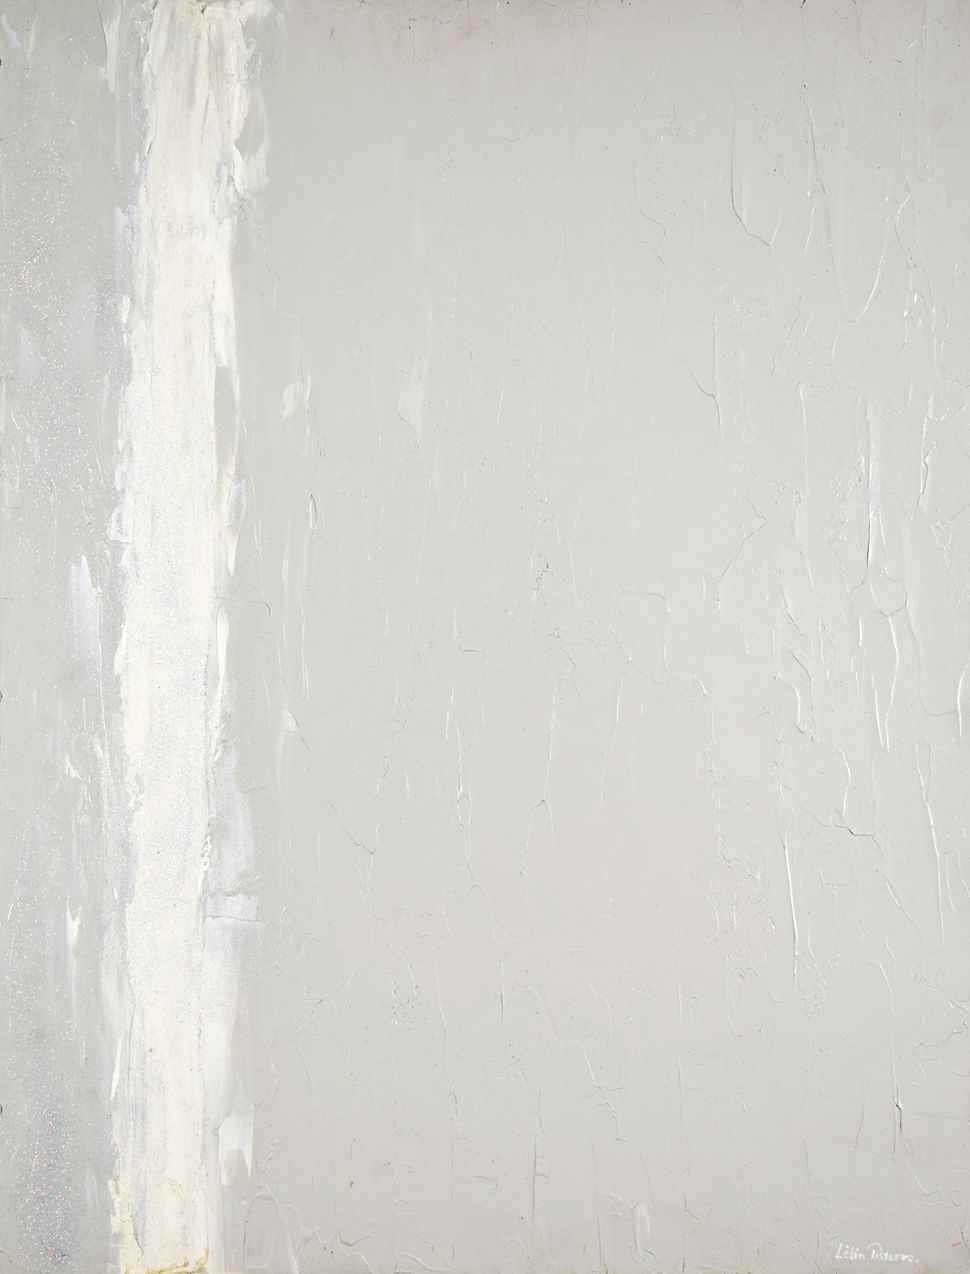 Humility - Lélia Pissarro, Contemporary (b. 1963)